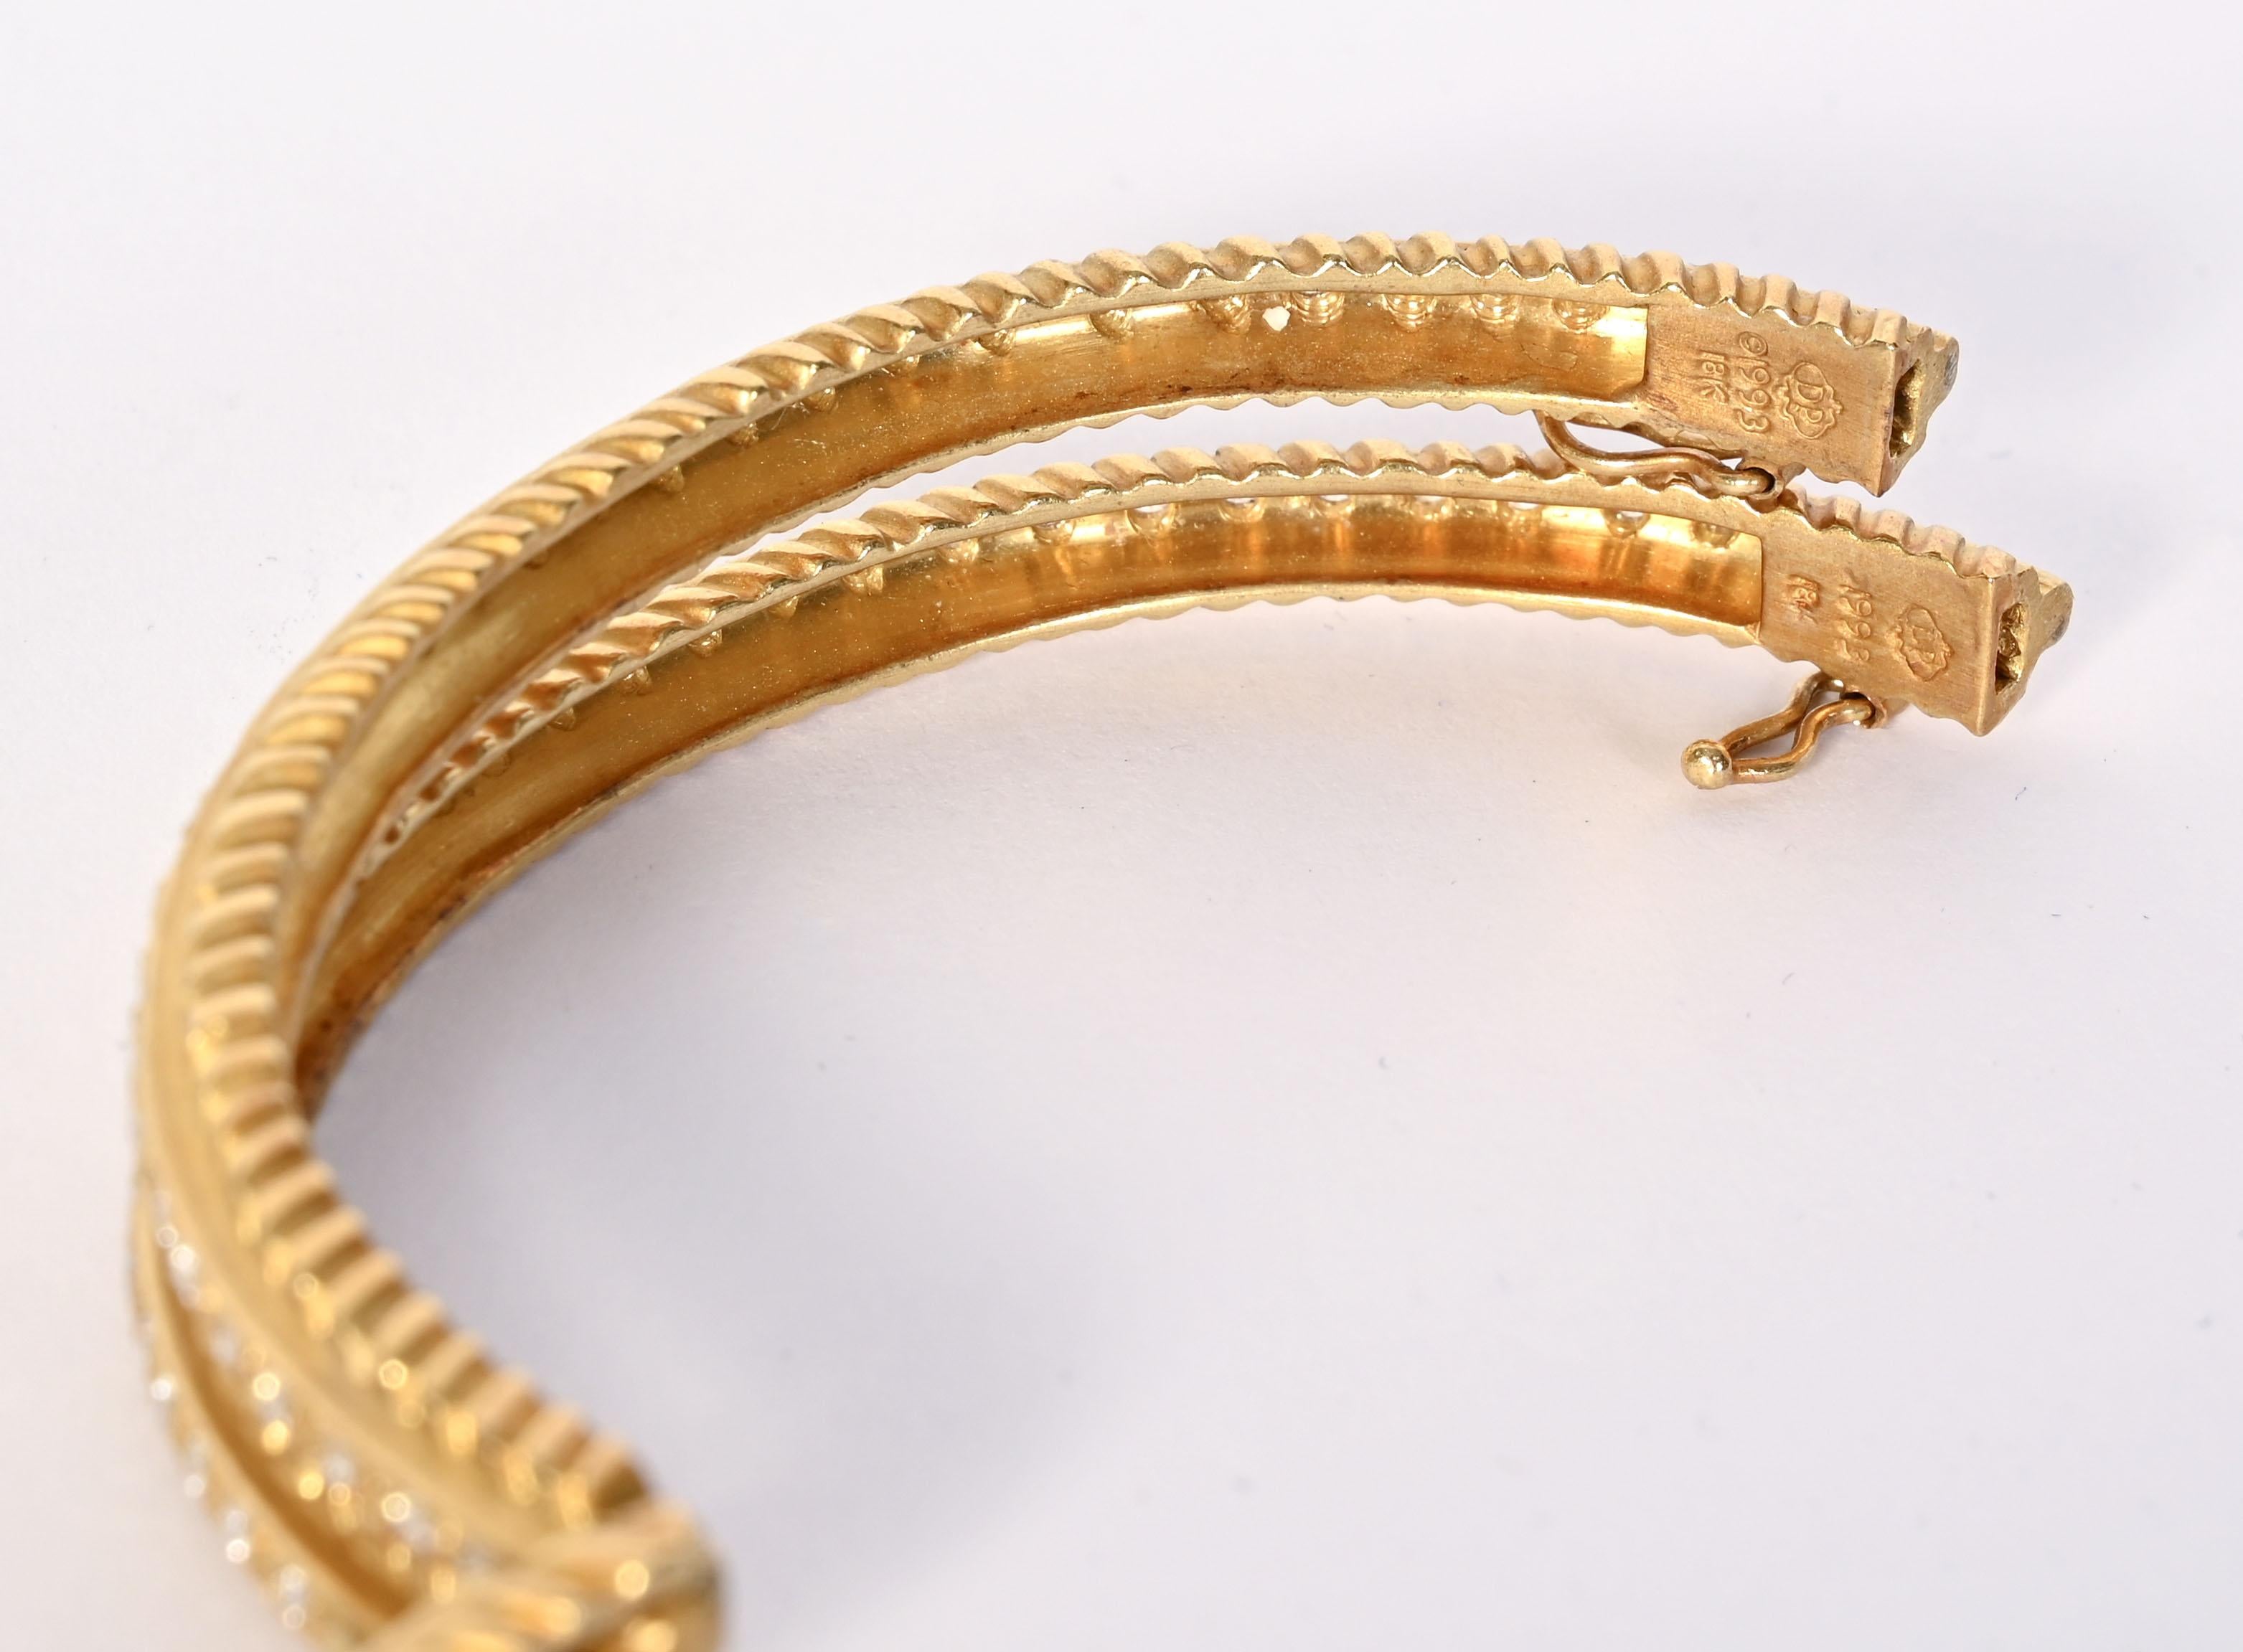 Brilliant Cut Pair of Gold and Diamond Bangle Bracelets by Doris Panos For Sale